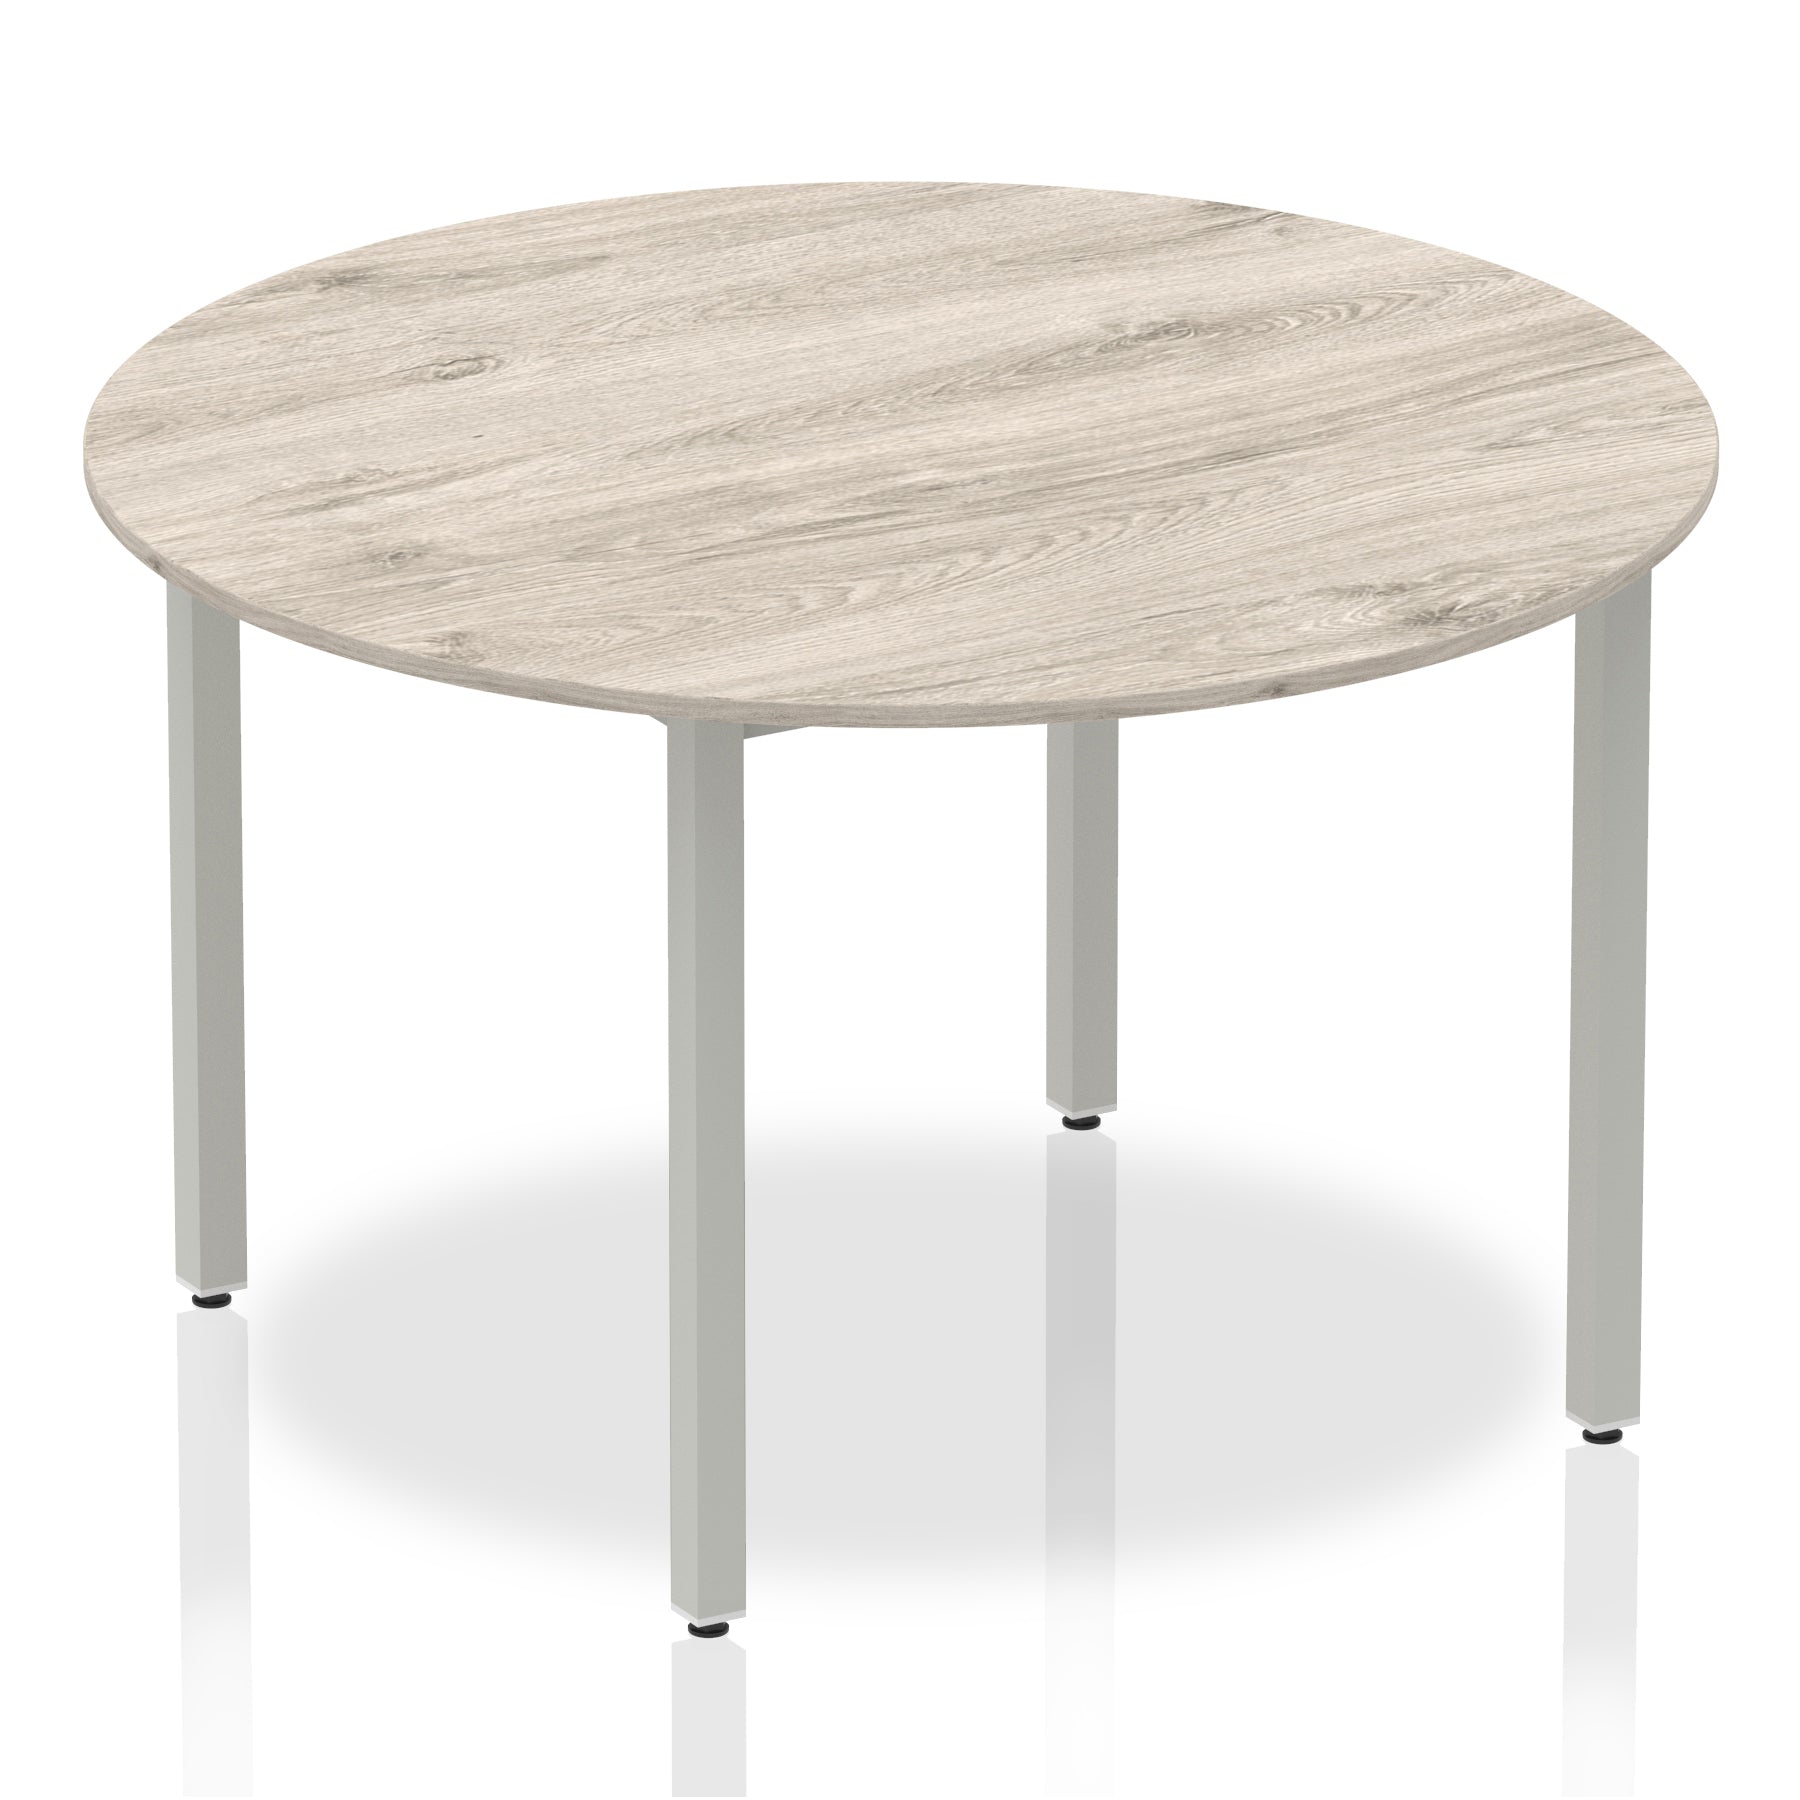 Impulse Circle Table With Box Frame Leg